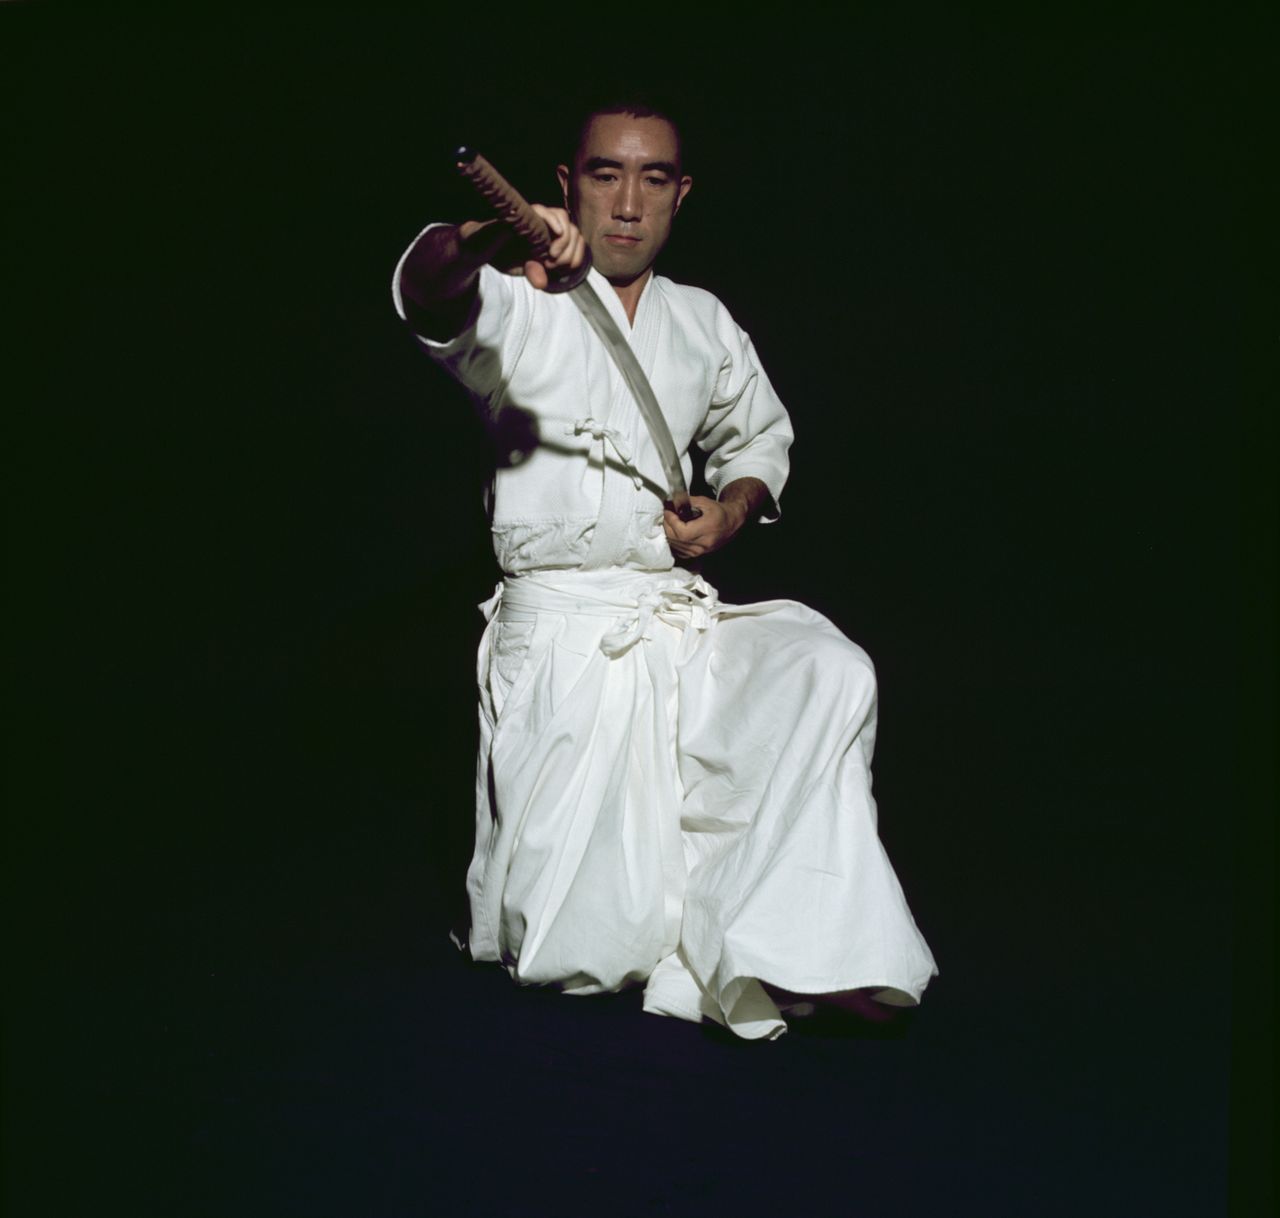 Mishima Yukio practicing the martial art of iaidō on July 3, 1970. (© Jiji)